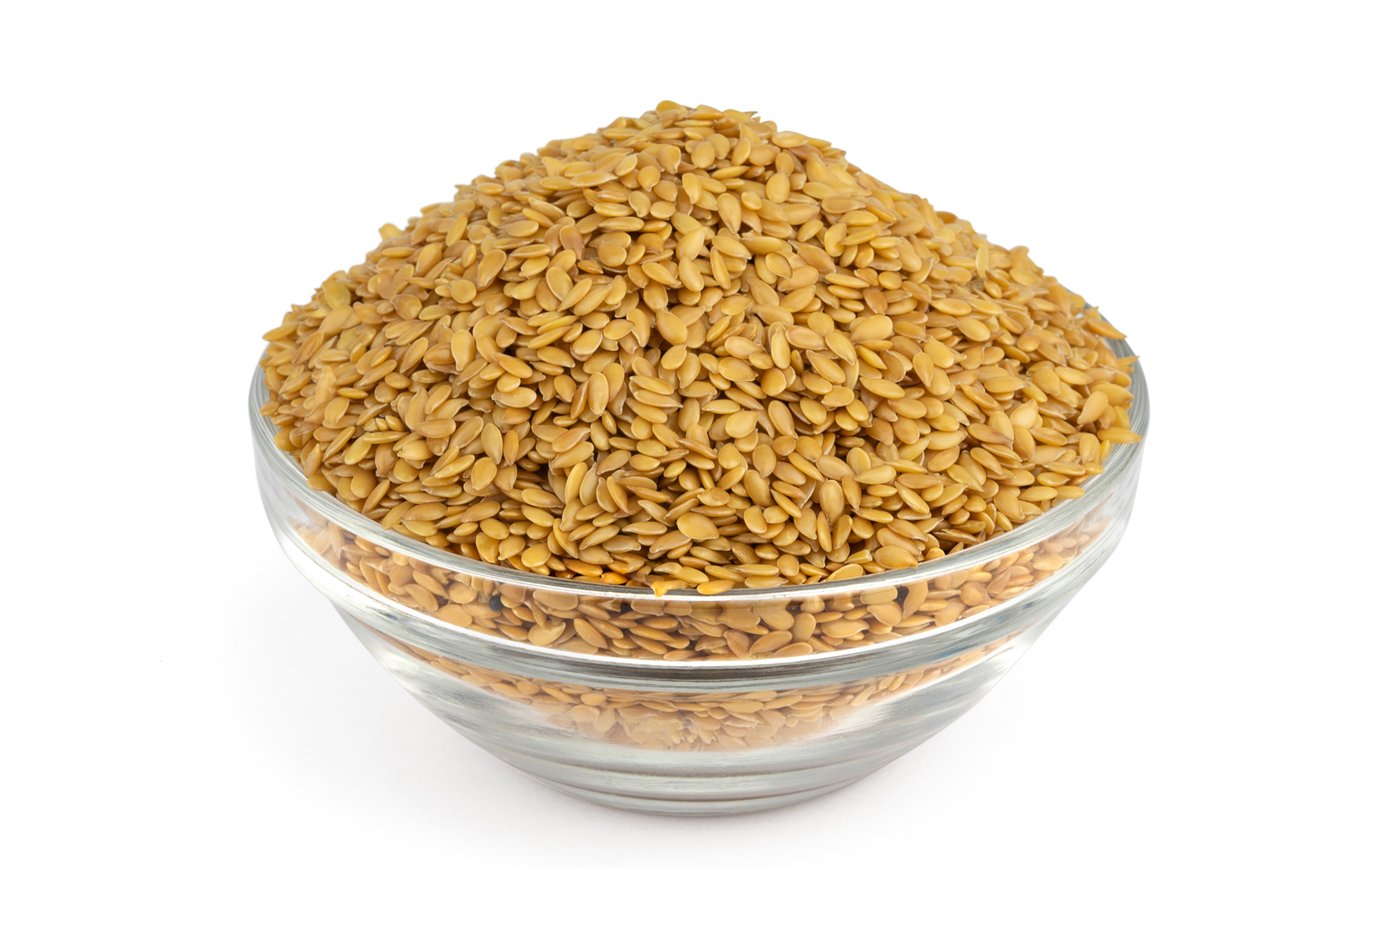 Organic Golden Flax Seed image zoom